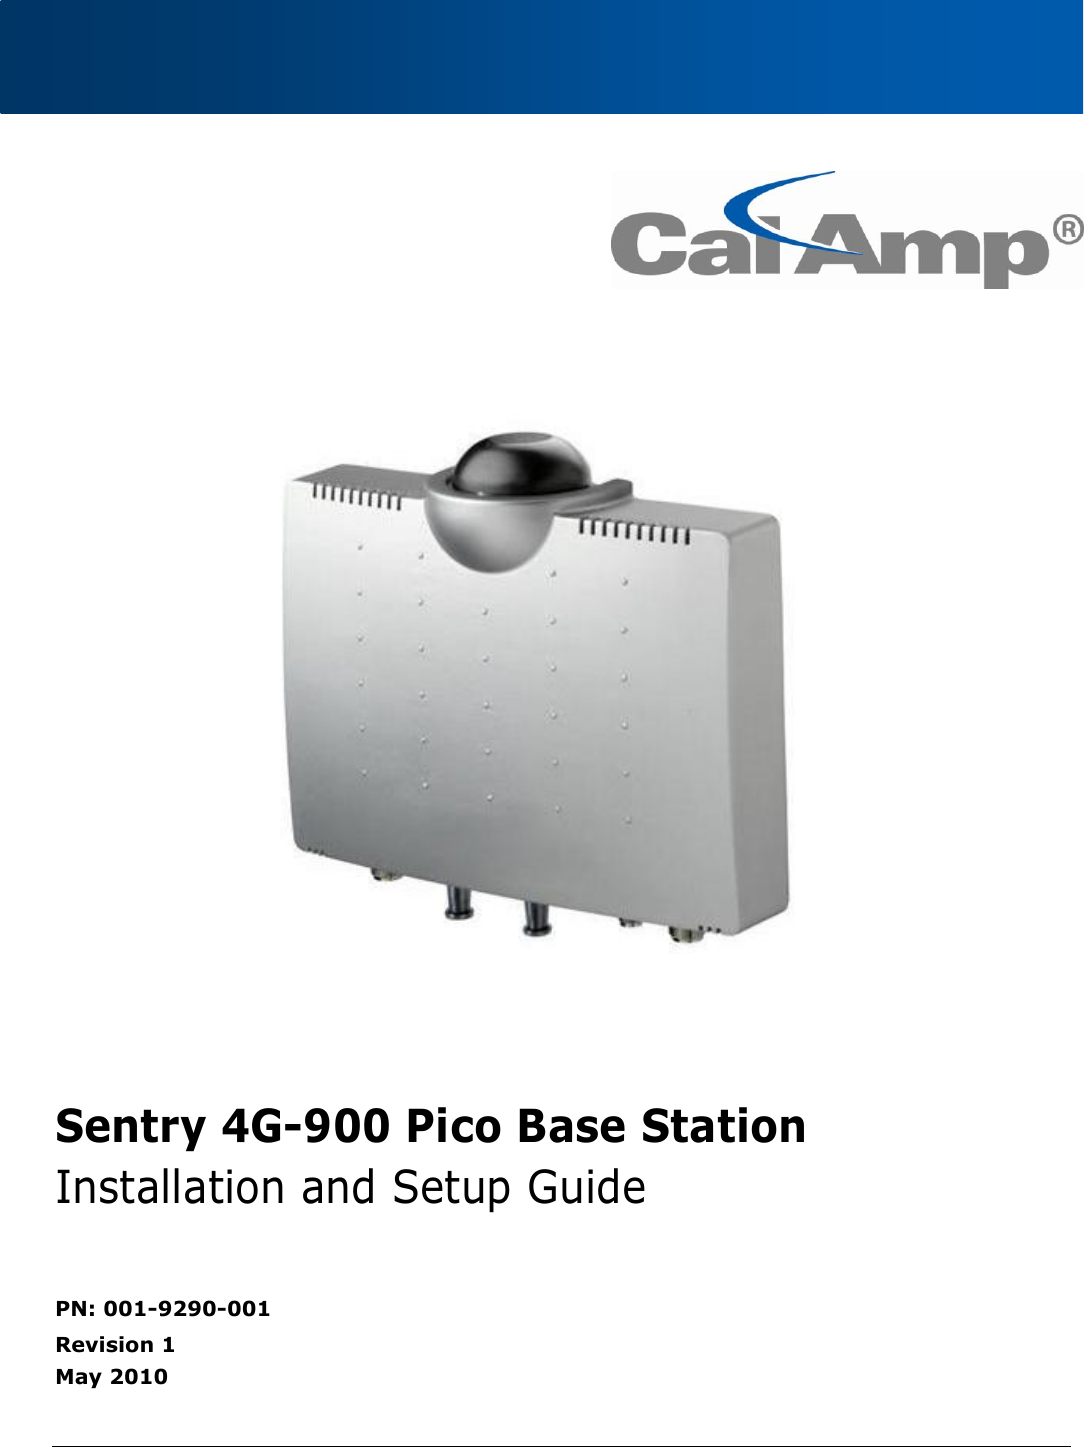                                                Sentry 4G-900 Pico Base Station Installation and Setup Guide     PN: 001-9290-001 Revision 1 May 2010